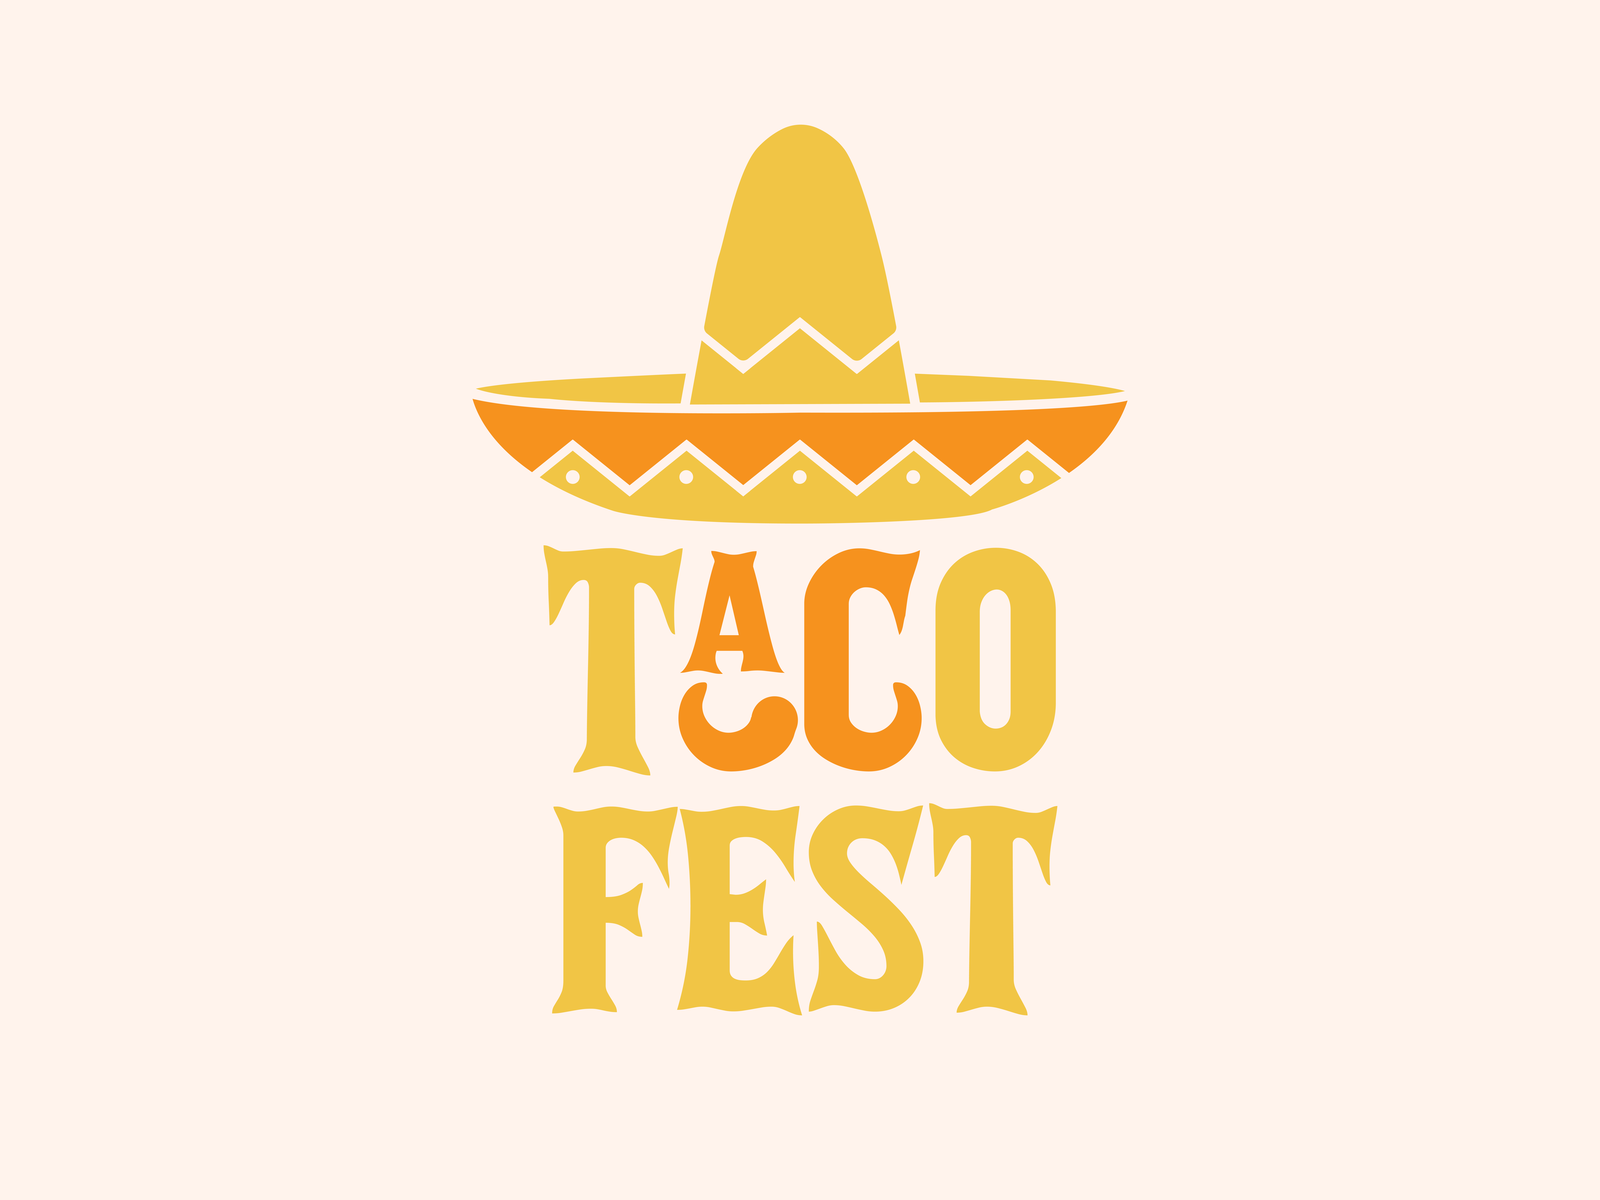 Taco Fest by Stephen Leadbetter on Dribbble